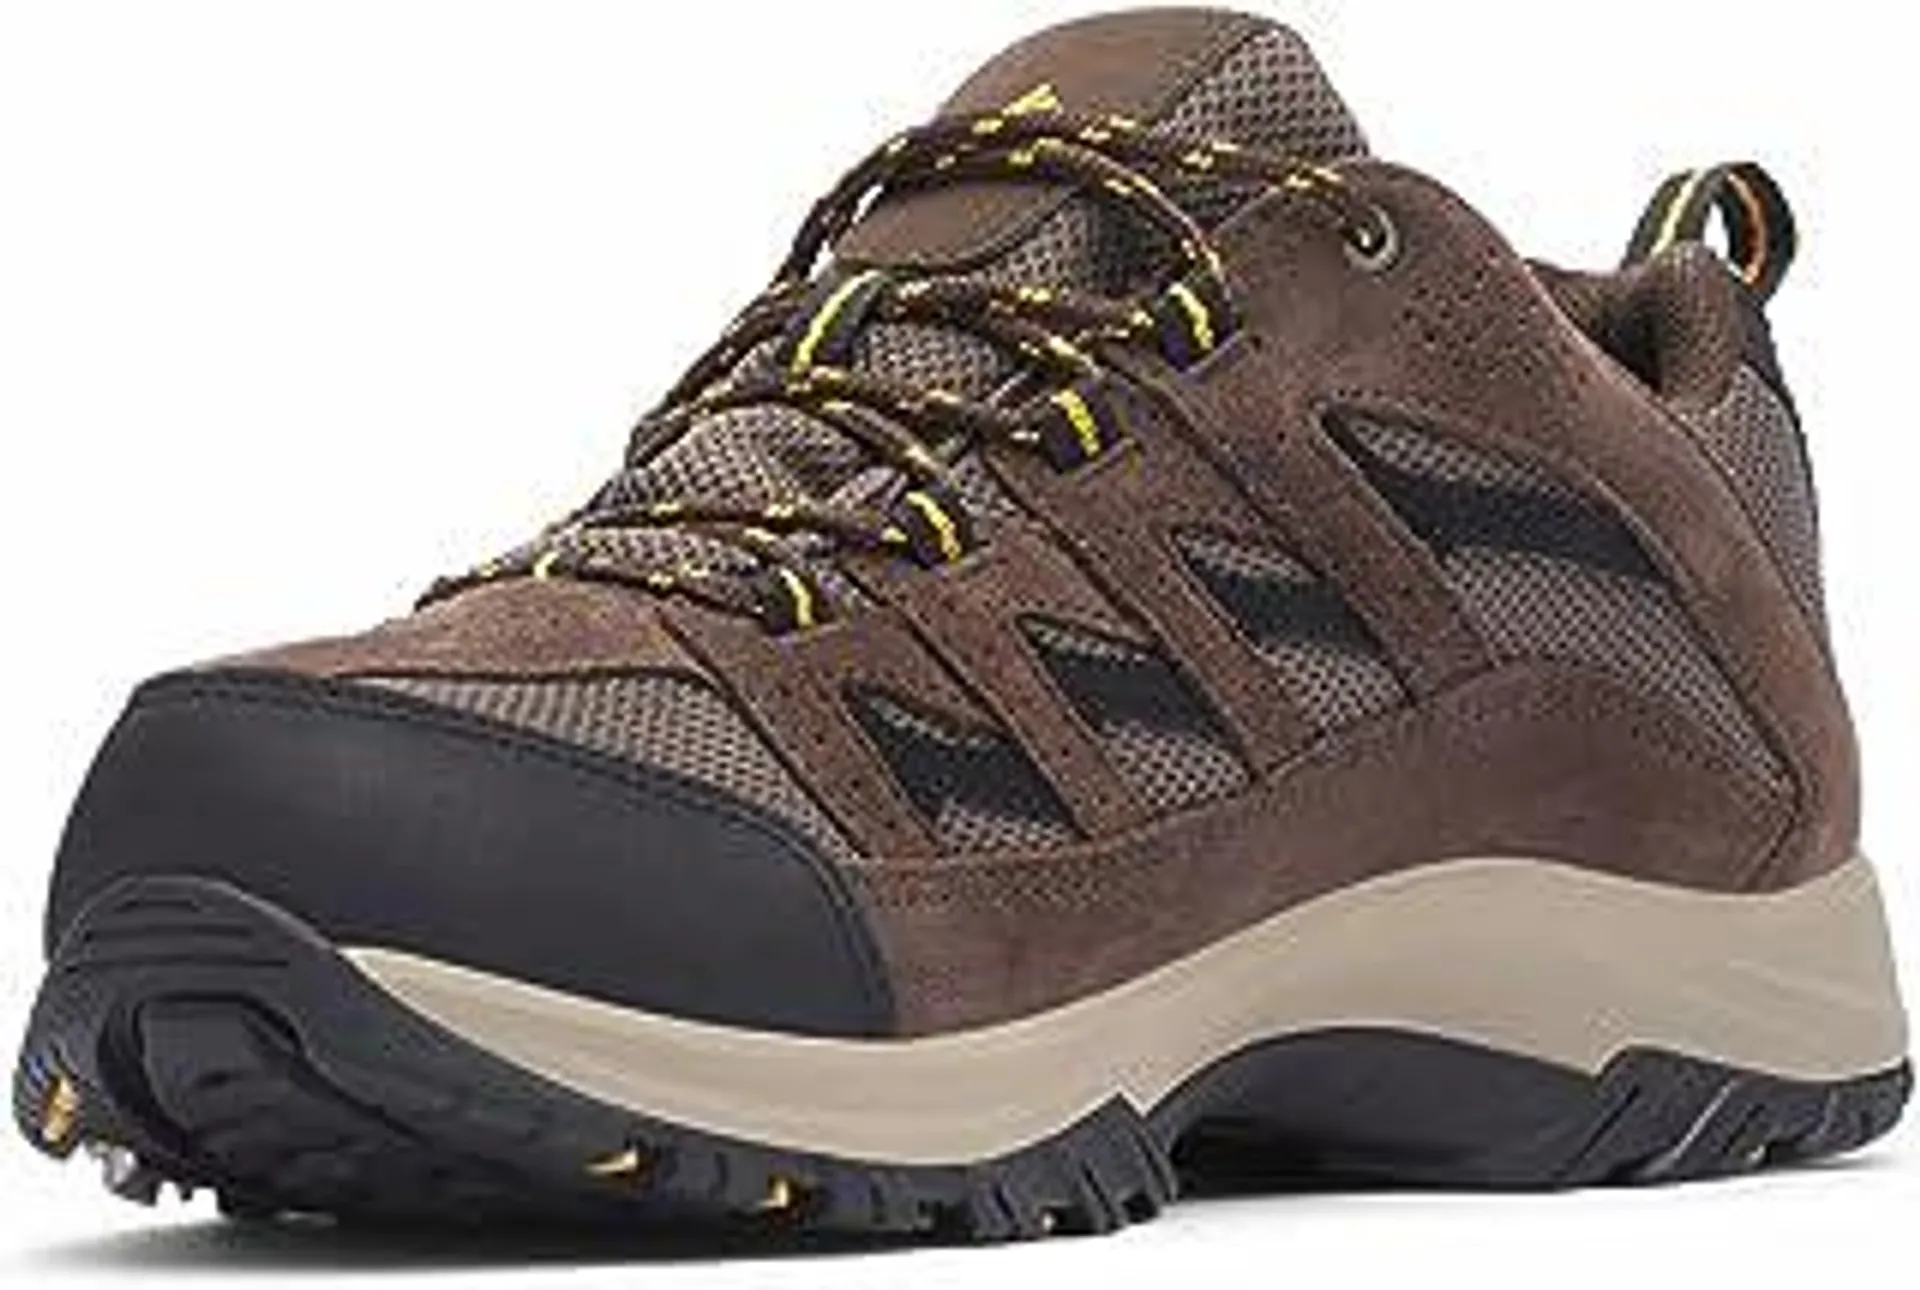 Men's Crestwood Waterproof Hiking Shoe